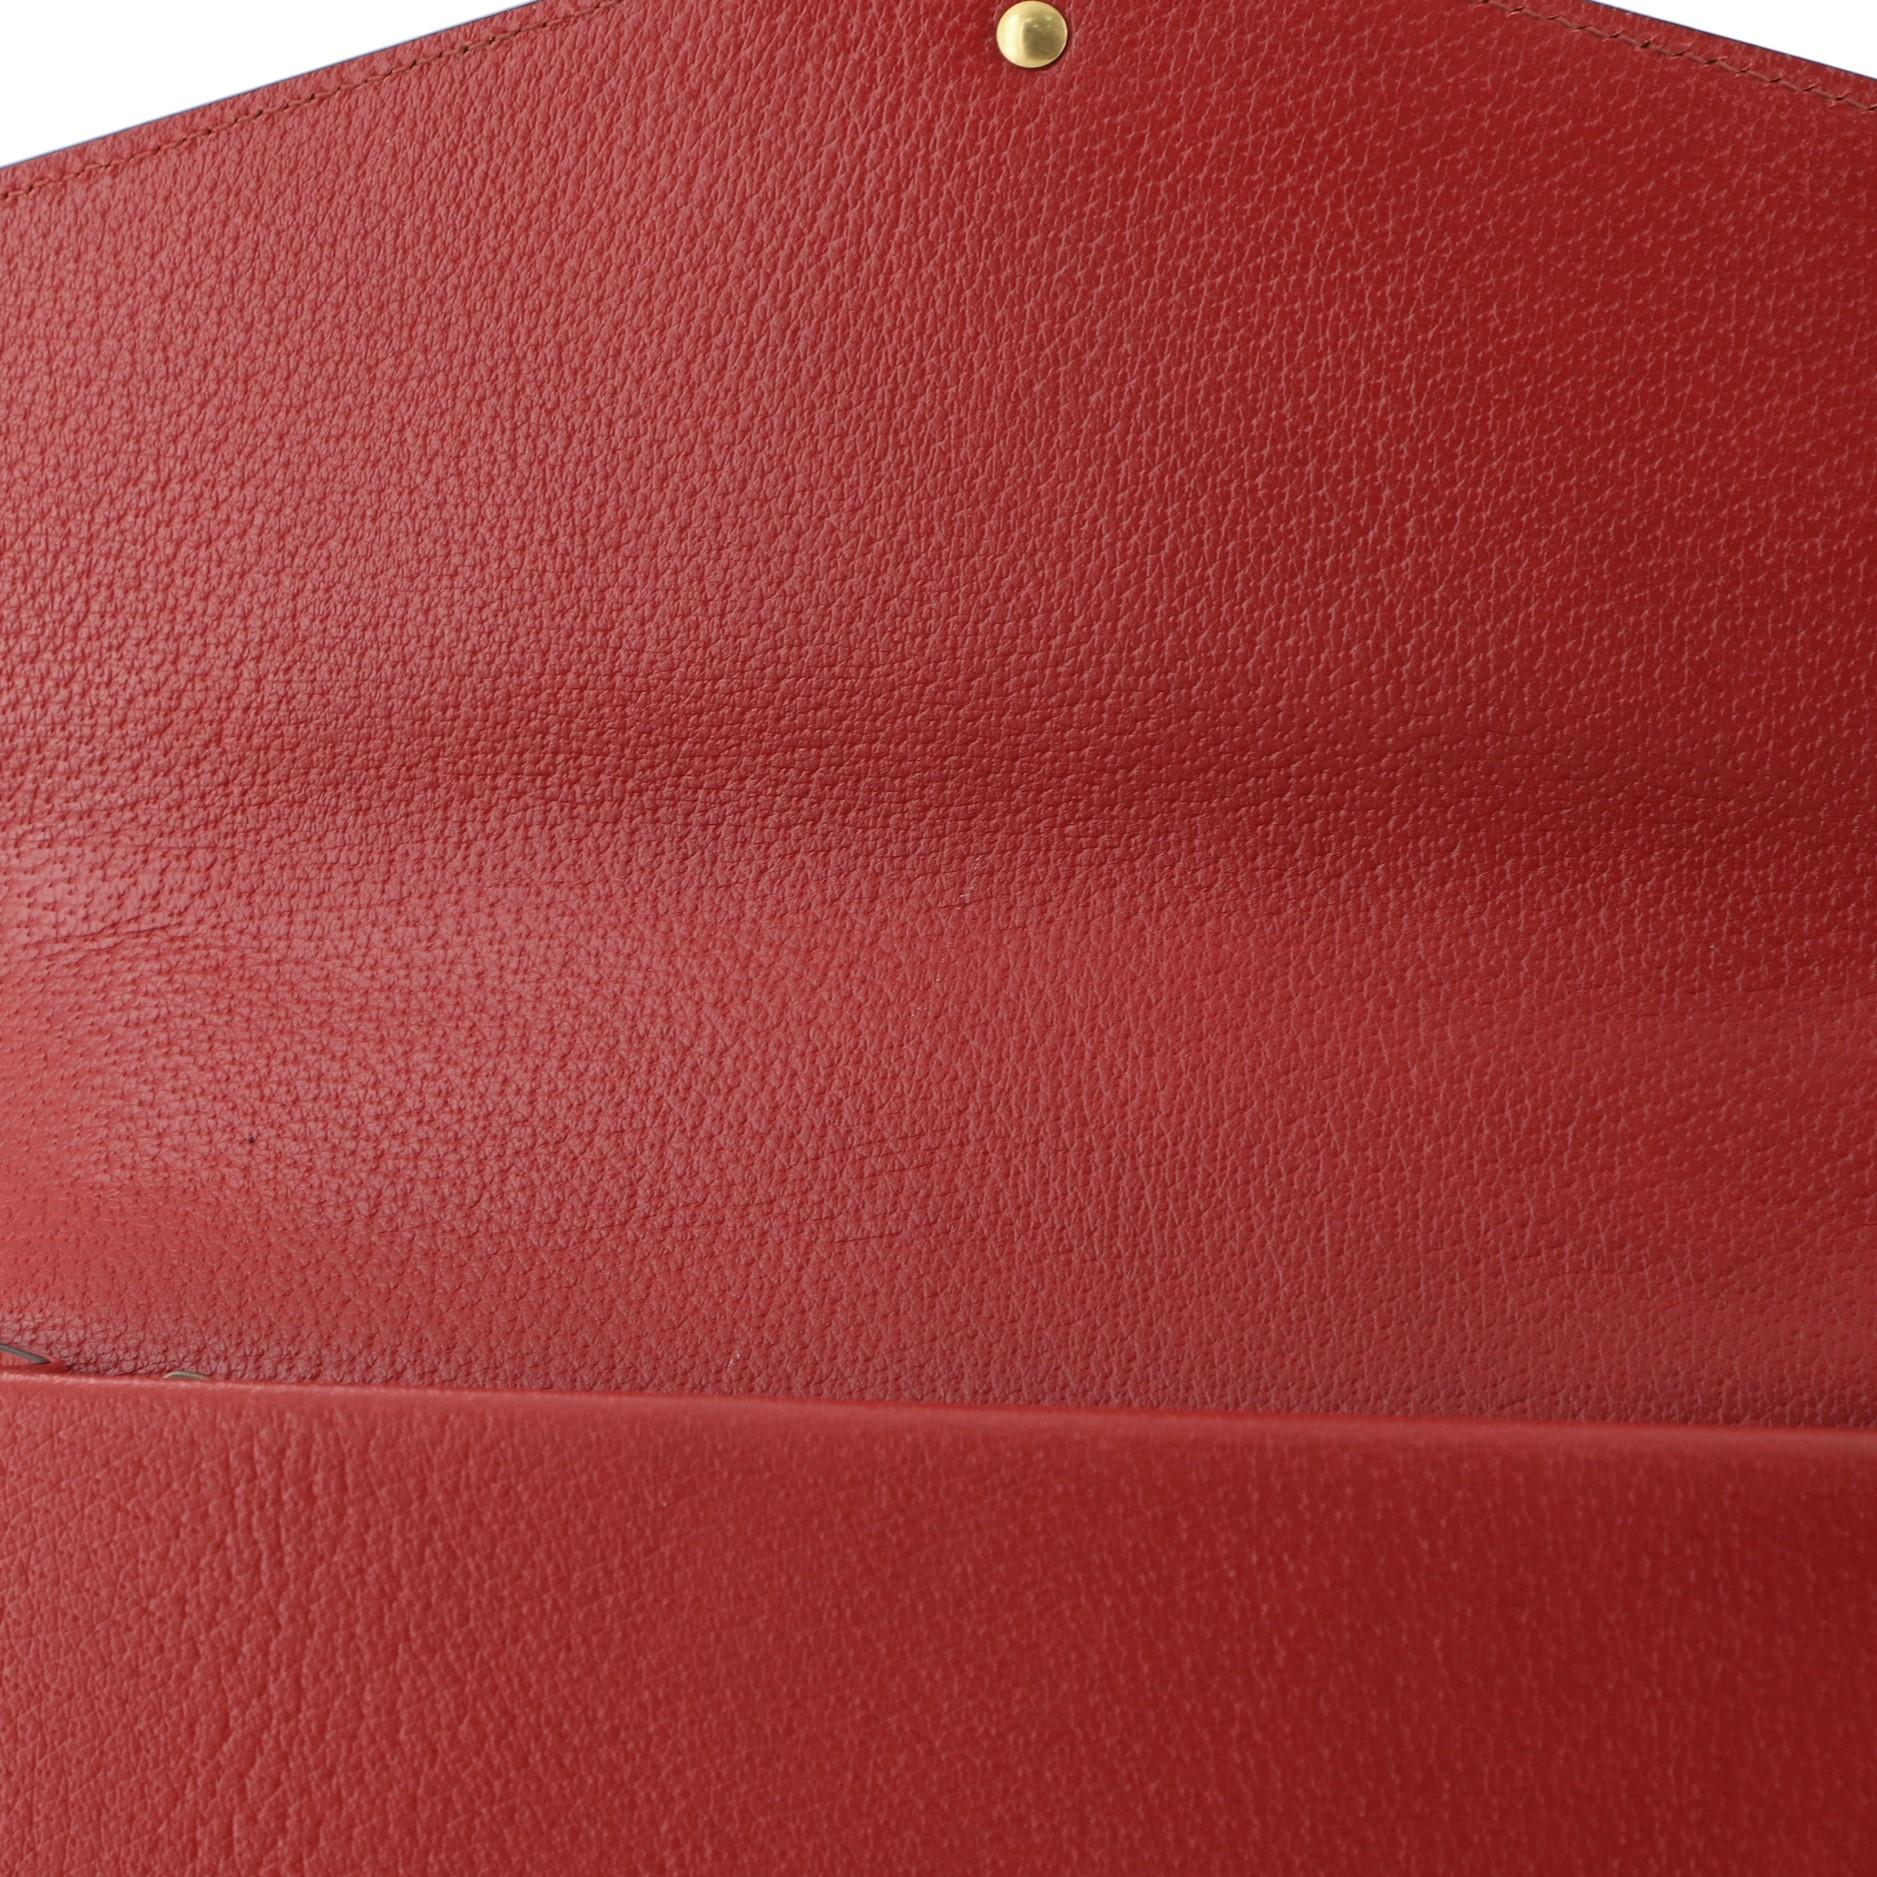 Gucci Web Dionysus Bag Leather Medium 3